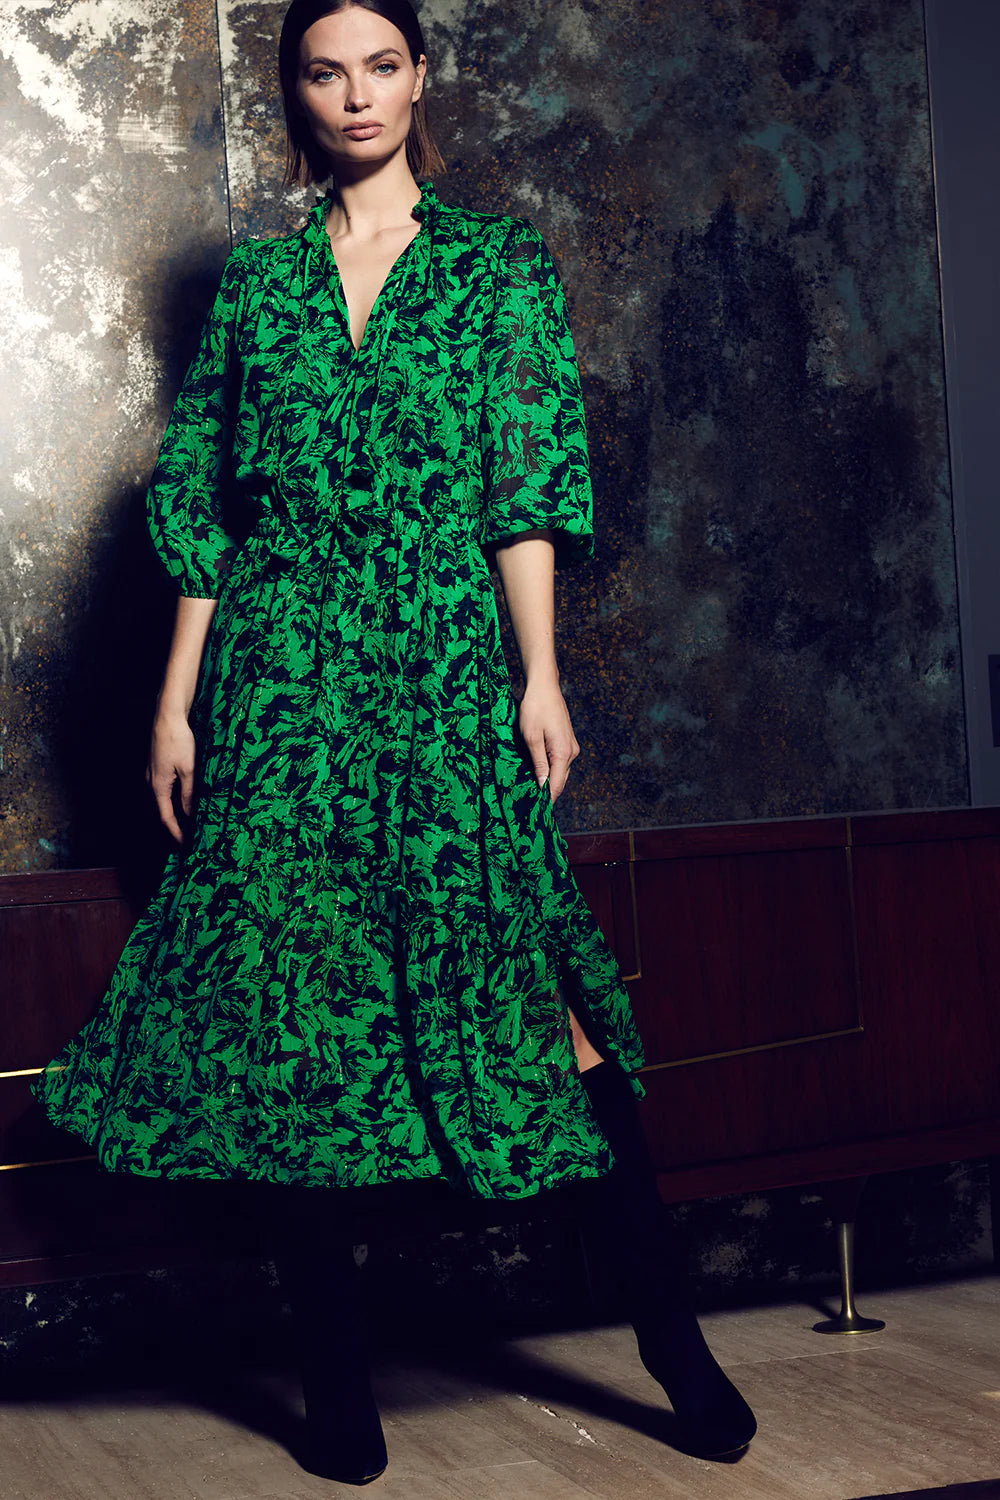 Olivia Dress - Emerald Abstract